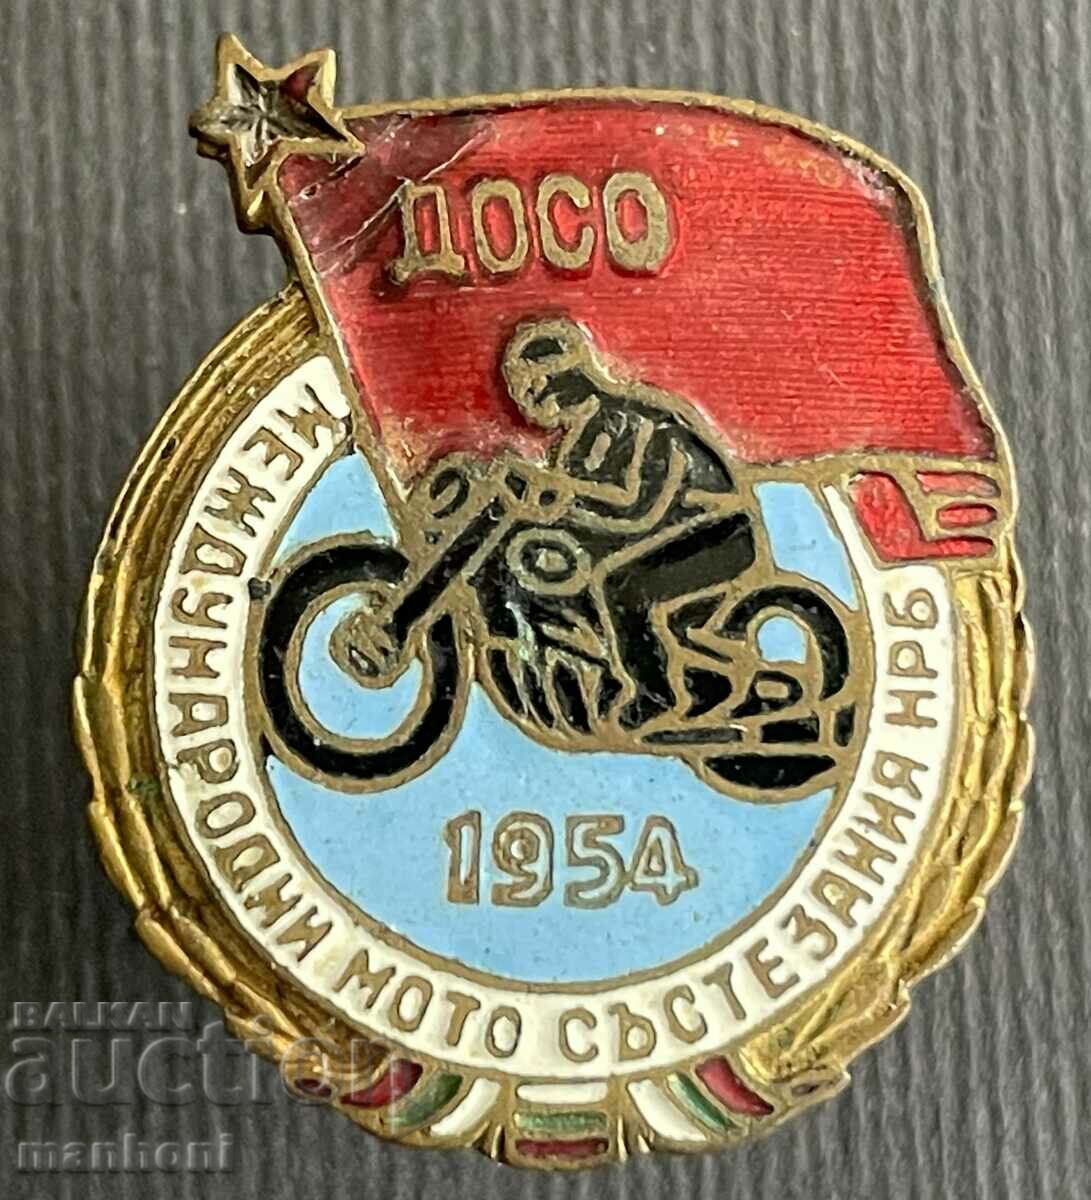 5606 Bulgaria Concursuri internaționale de motociclete 1954 NRB DOSO ema